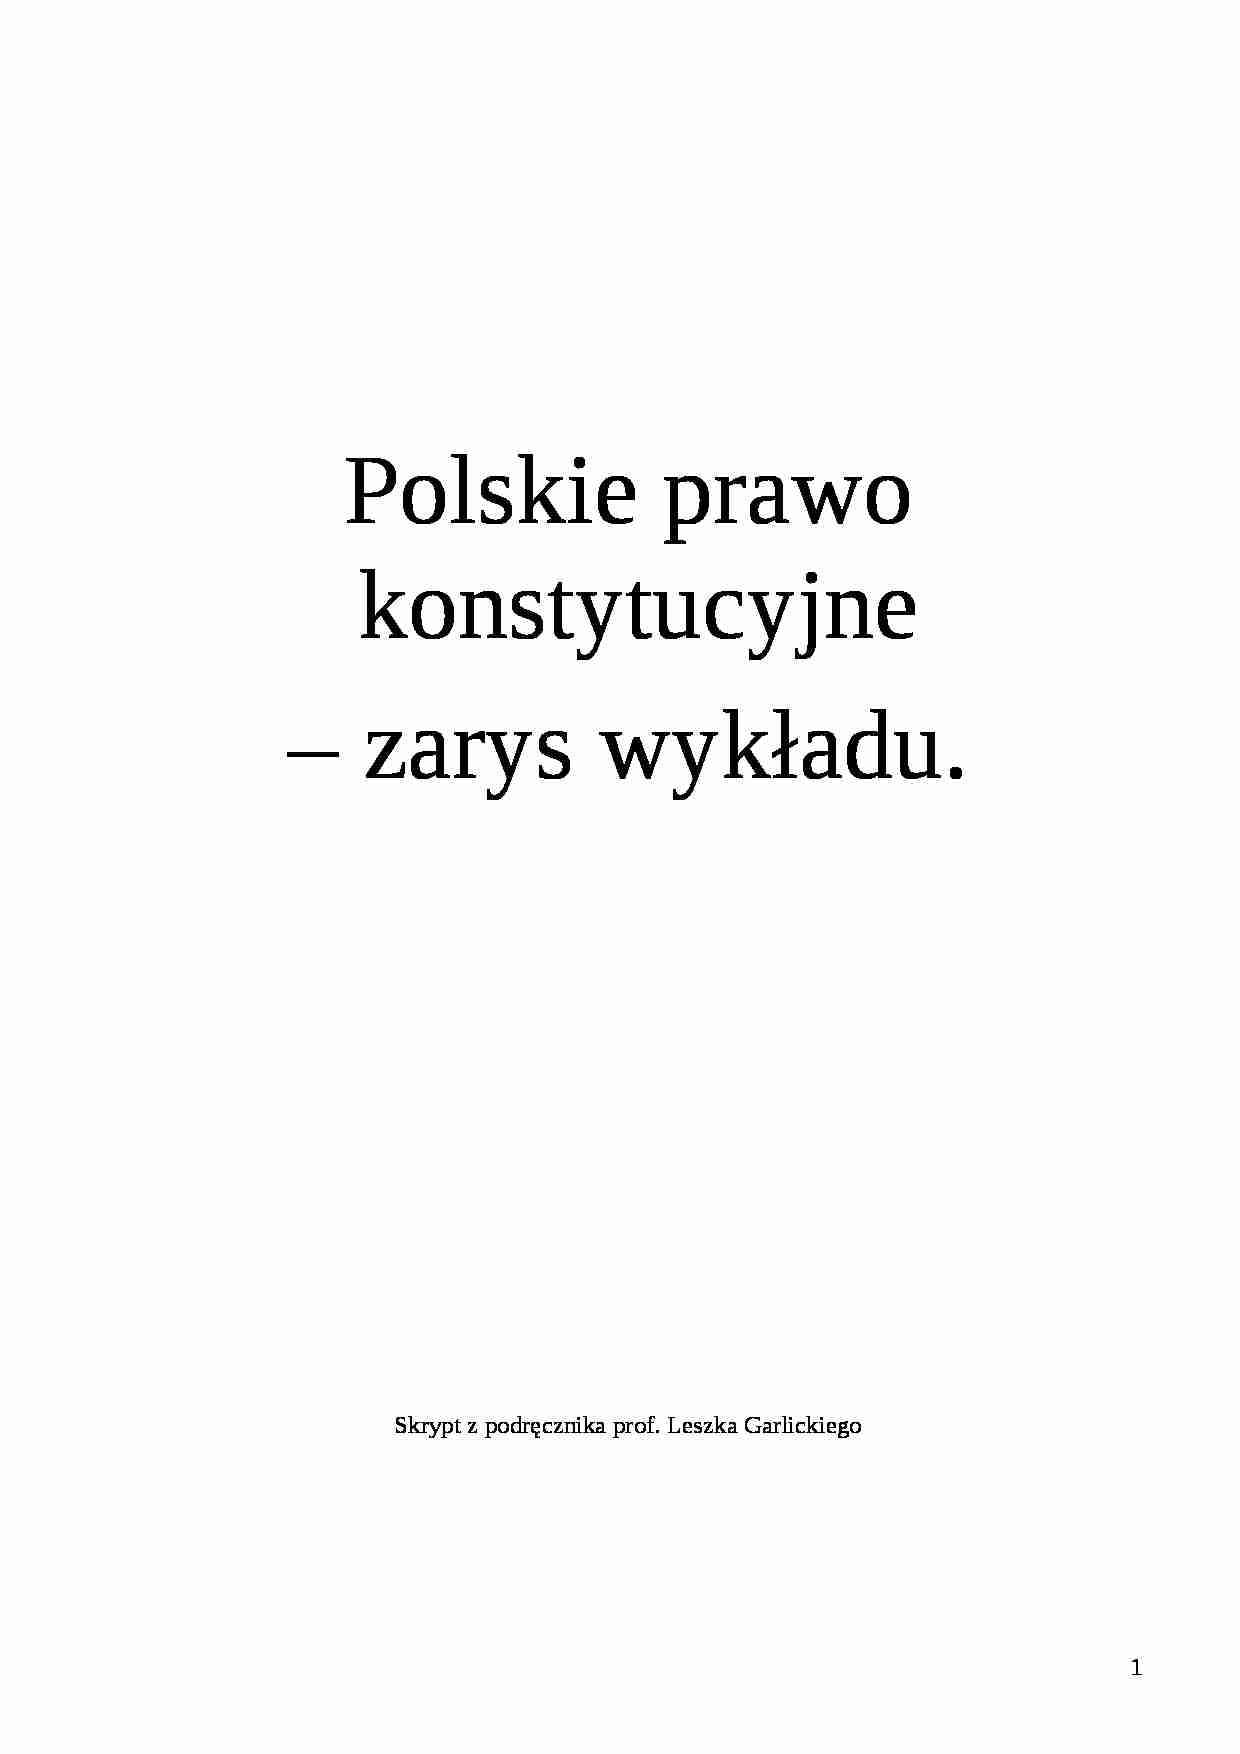 Polskie prawo konstytucyjne - skrypt. - strona 1